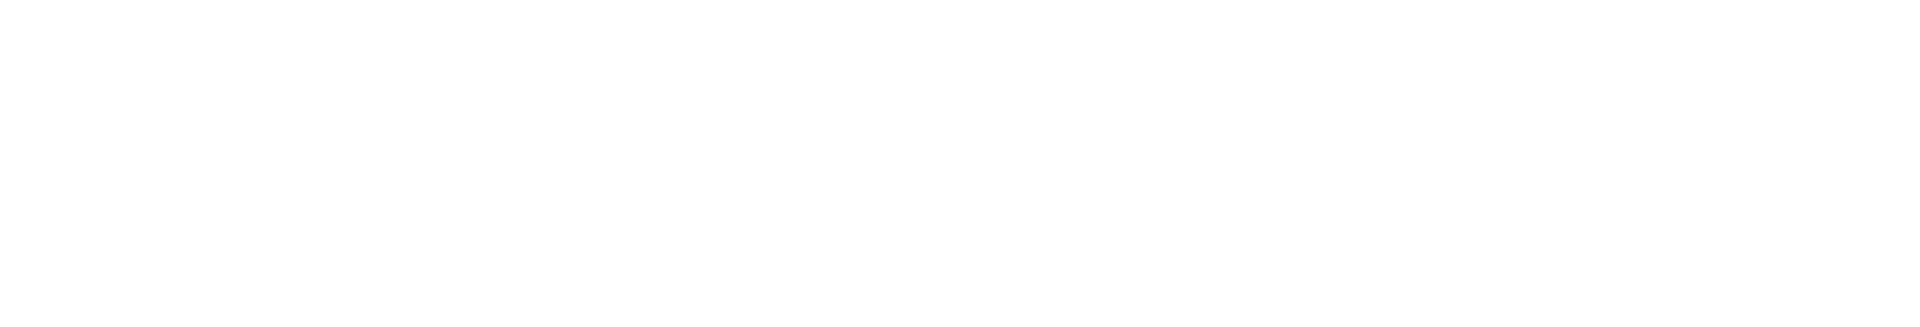 NextLevel Wardrobe Main Logo